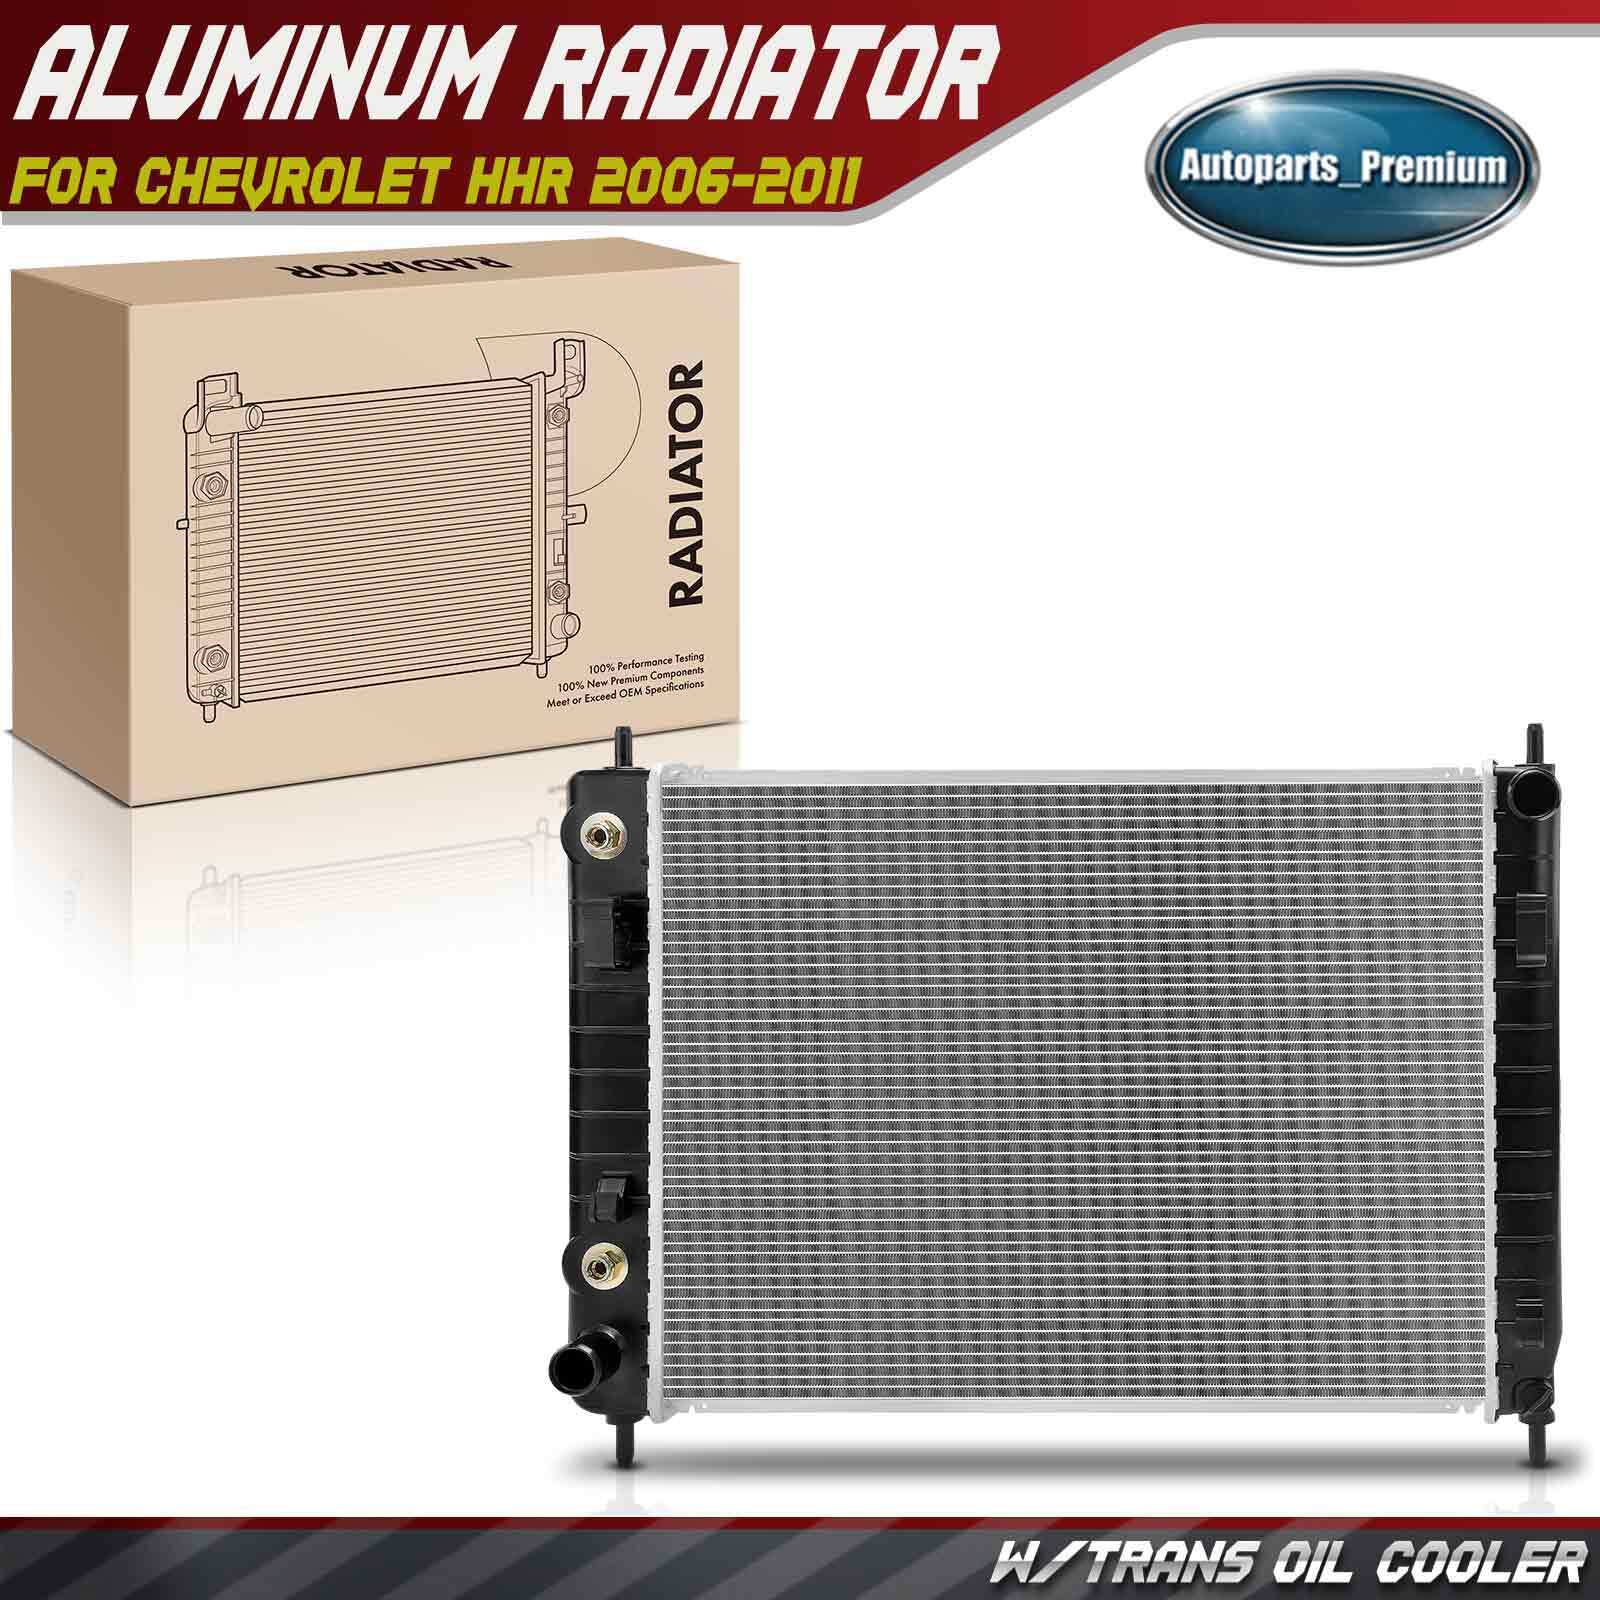 New Aluminum Radiator with Transmission Oil Cooler for Chevrolet HHR 2006-2011